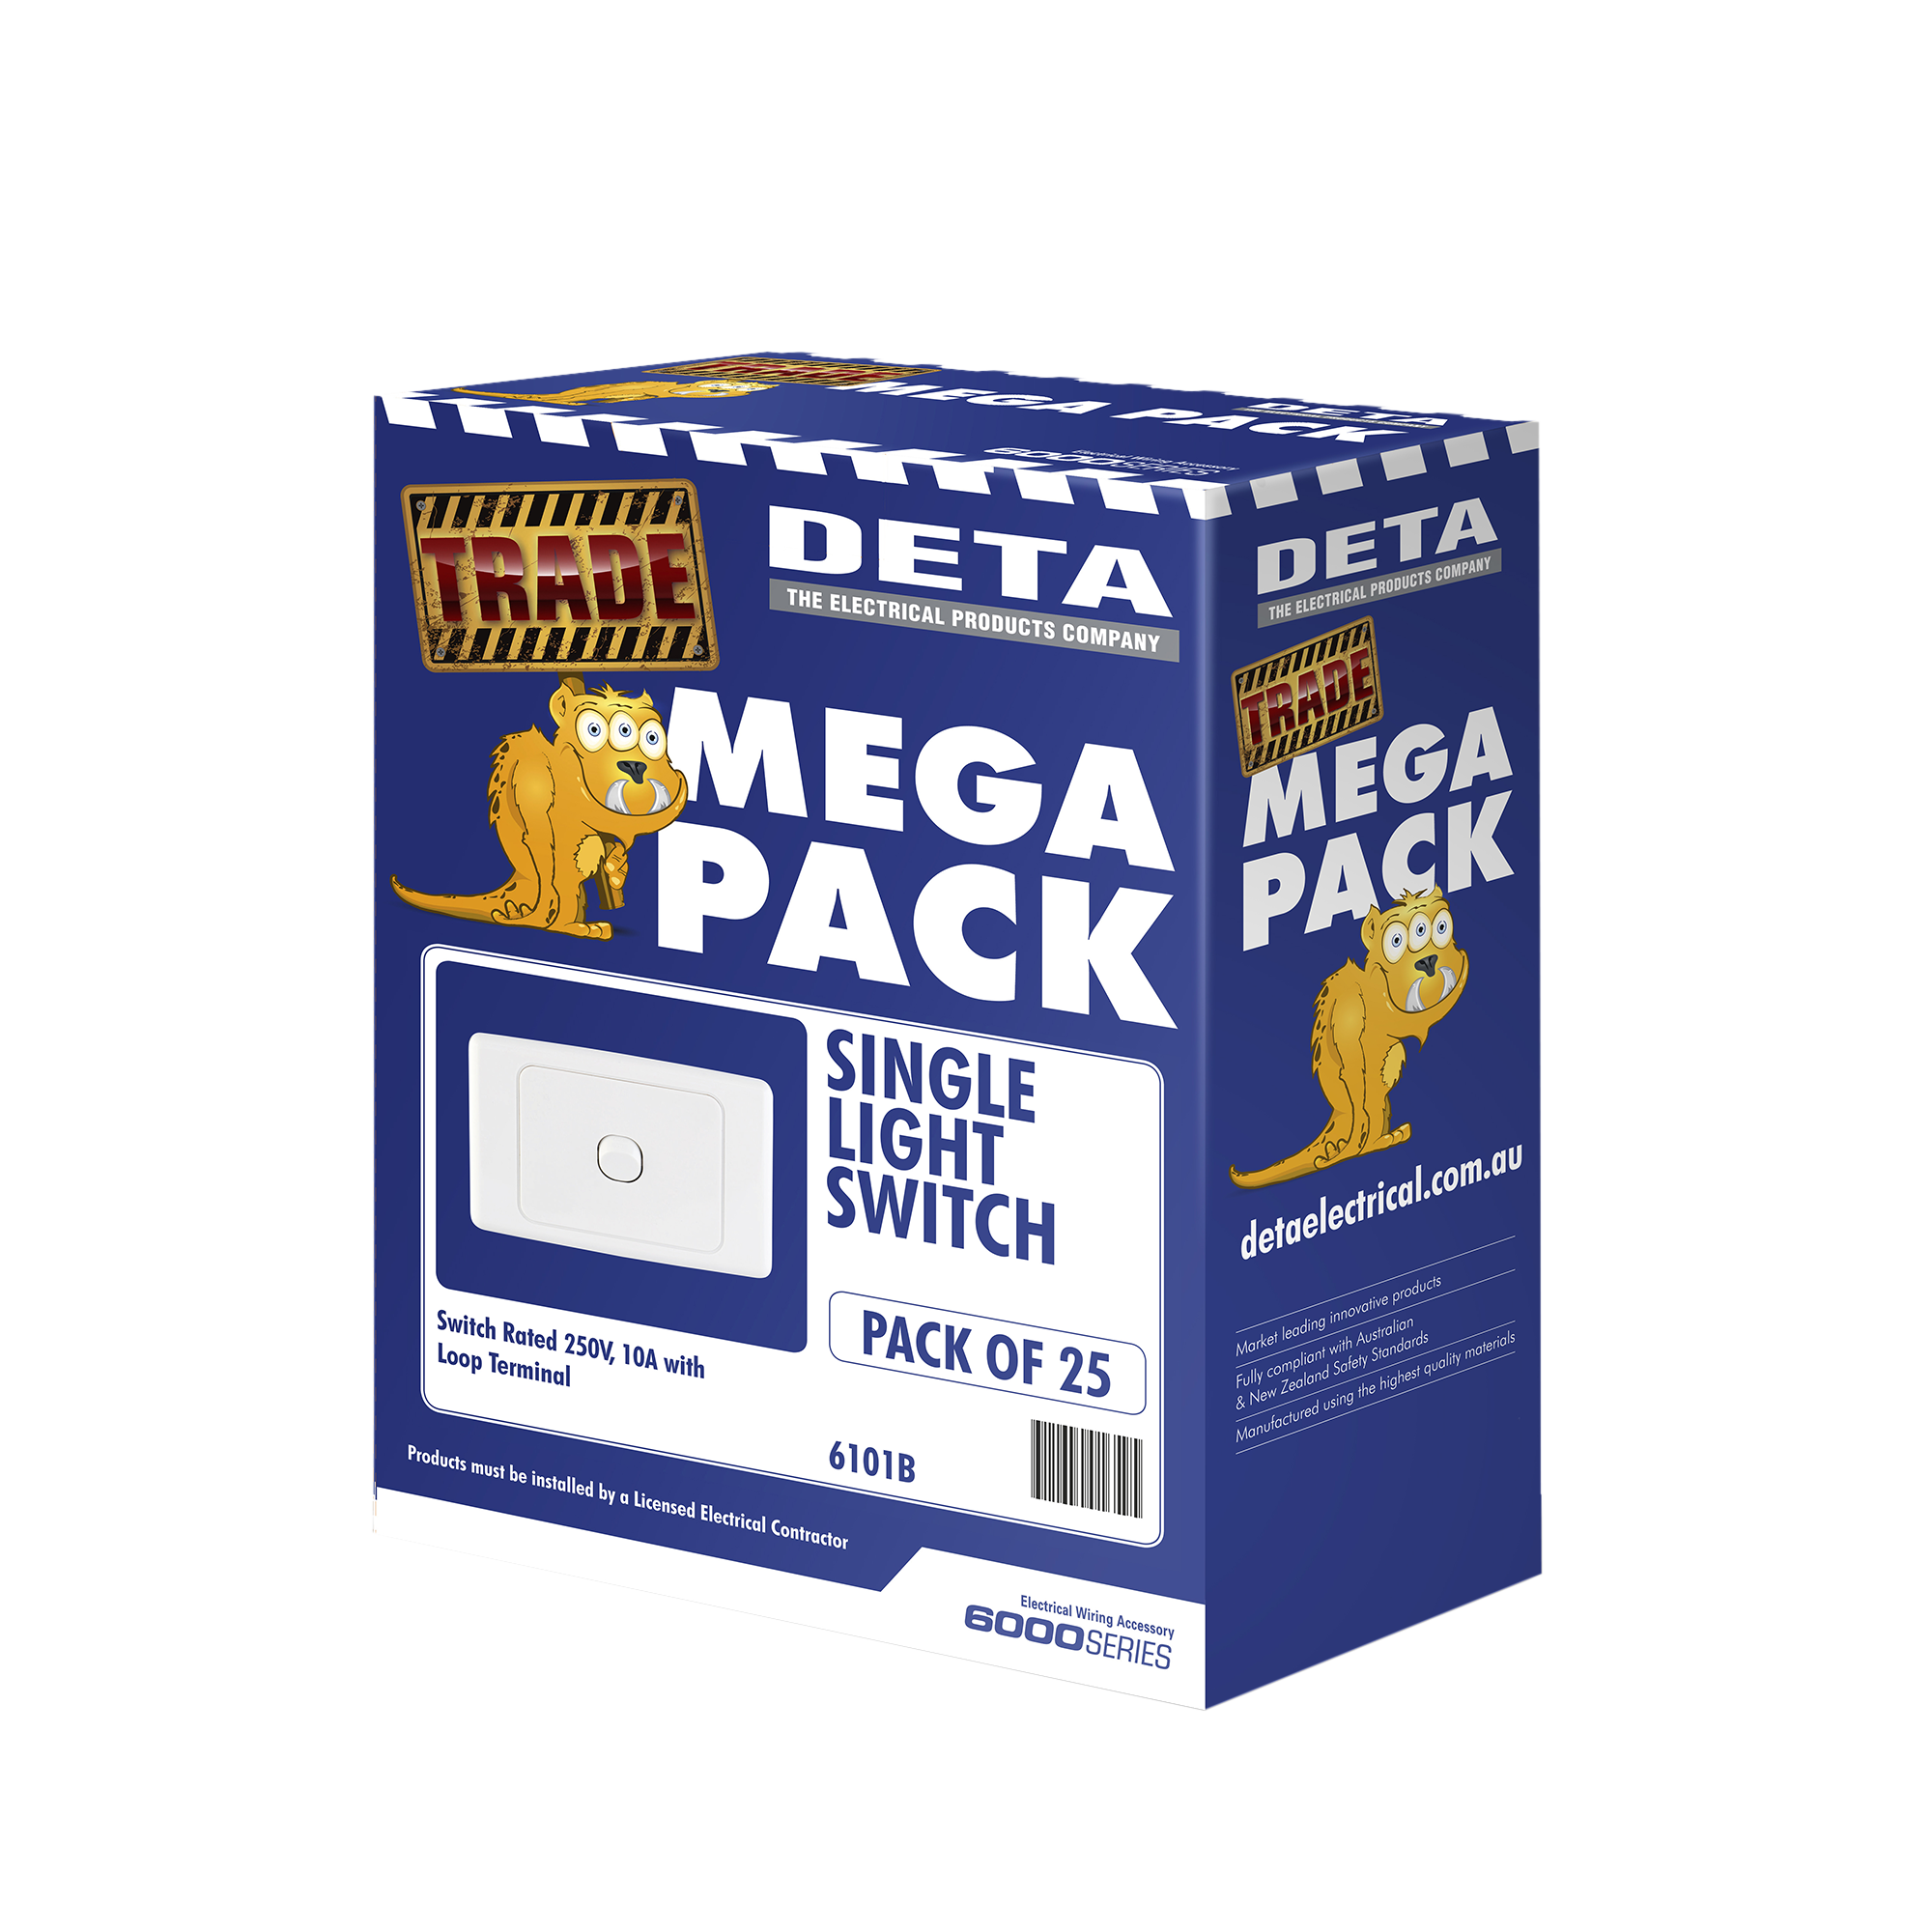  Deta single switch - 25 pack